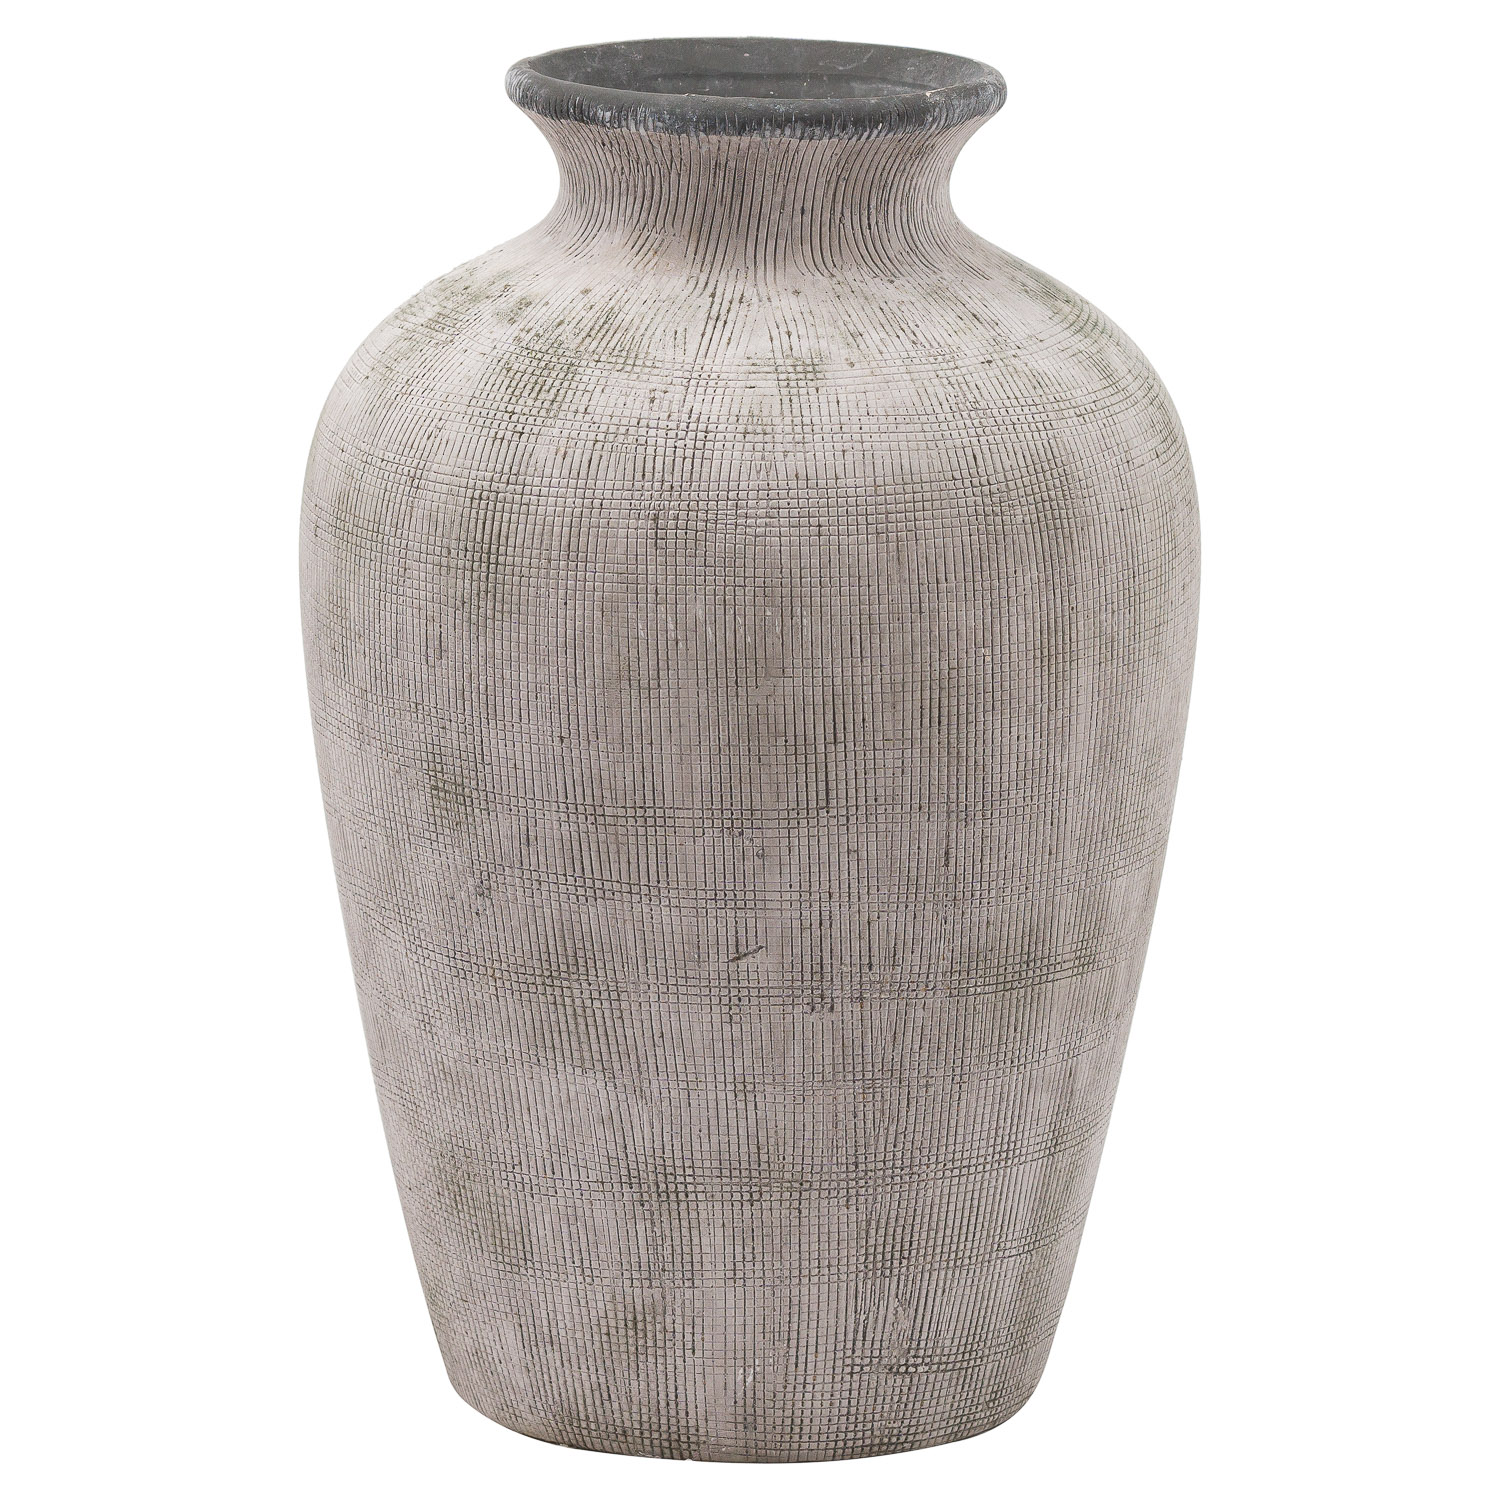 Bloomville Chours Stone Vase - Image 1